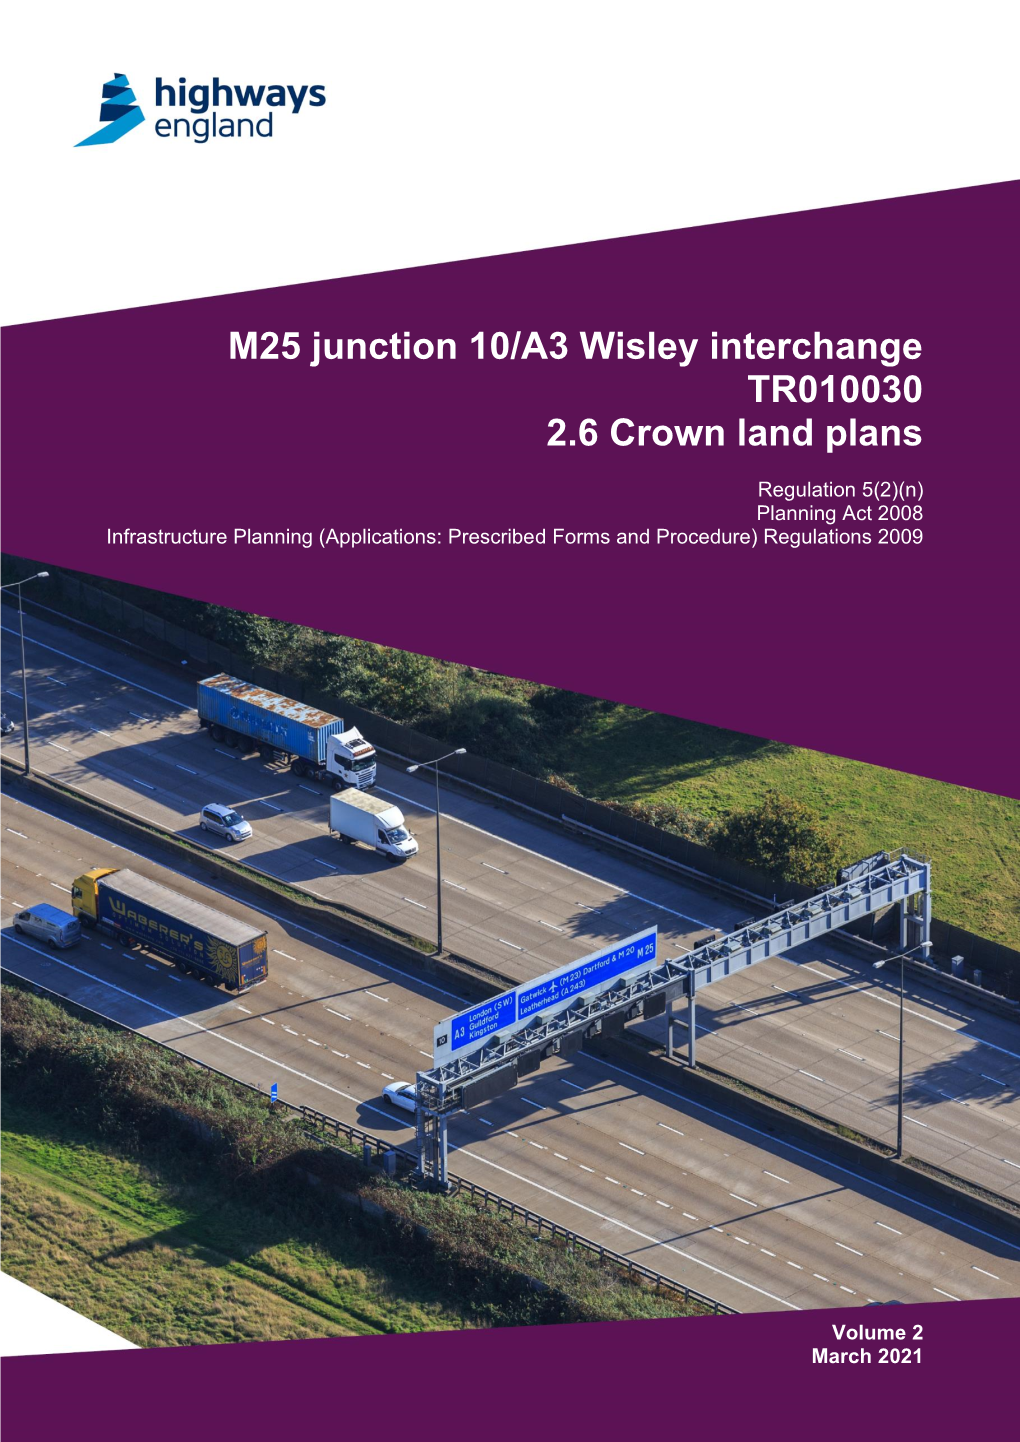 M25 Junction 10/A3 Wisley Interchange TR010030 2.6 Crown Land Plans